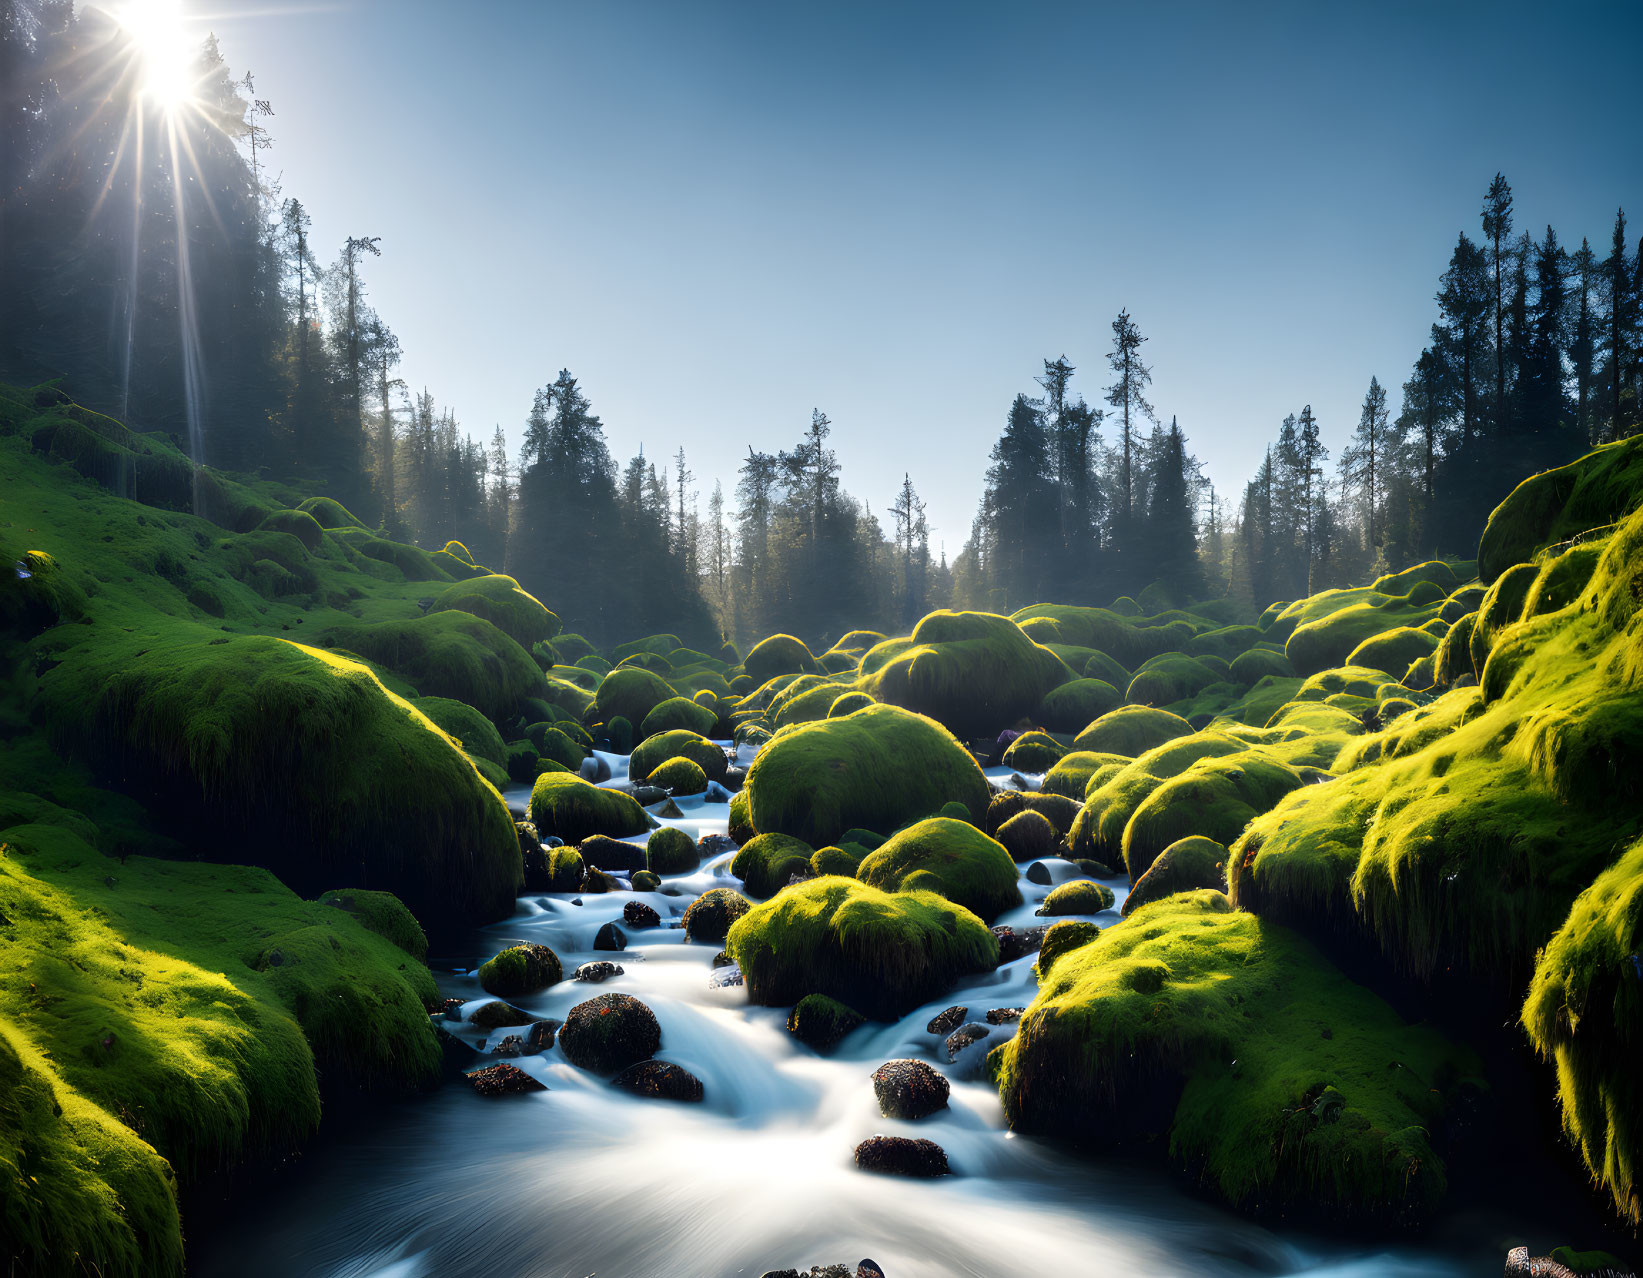 Tranquil woodland scene: Serene stream, moss-covered rocks, sunlit forest canopy